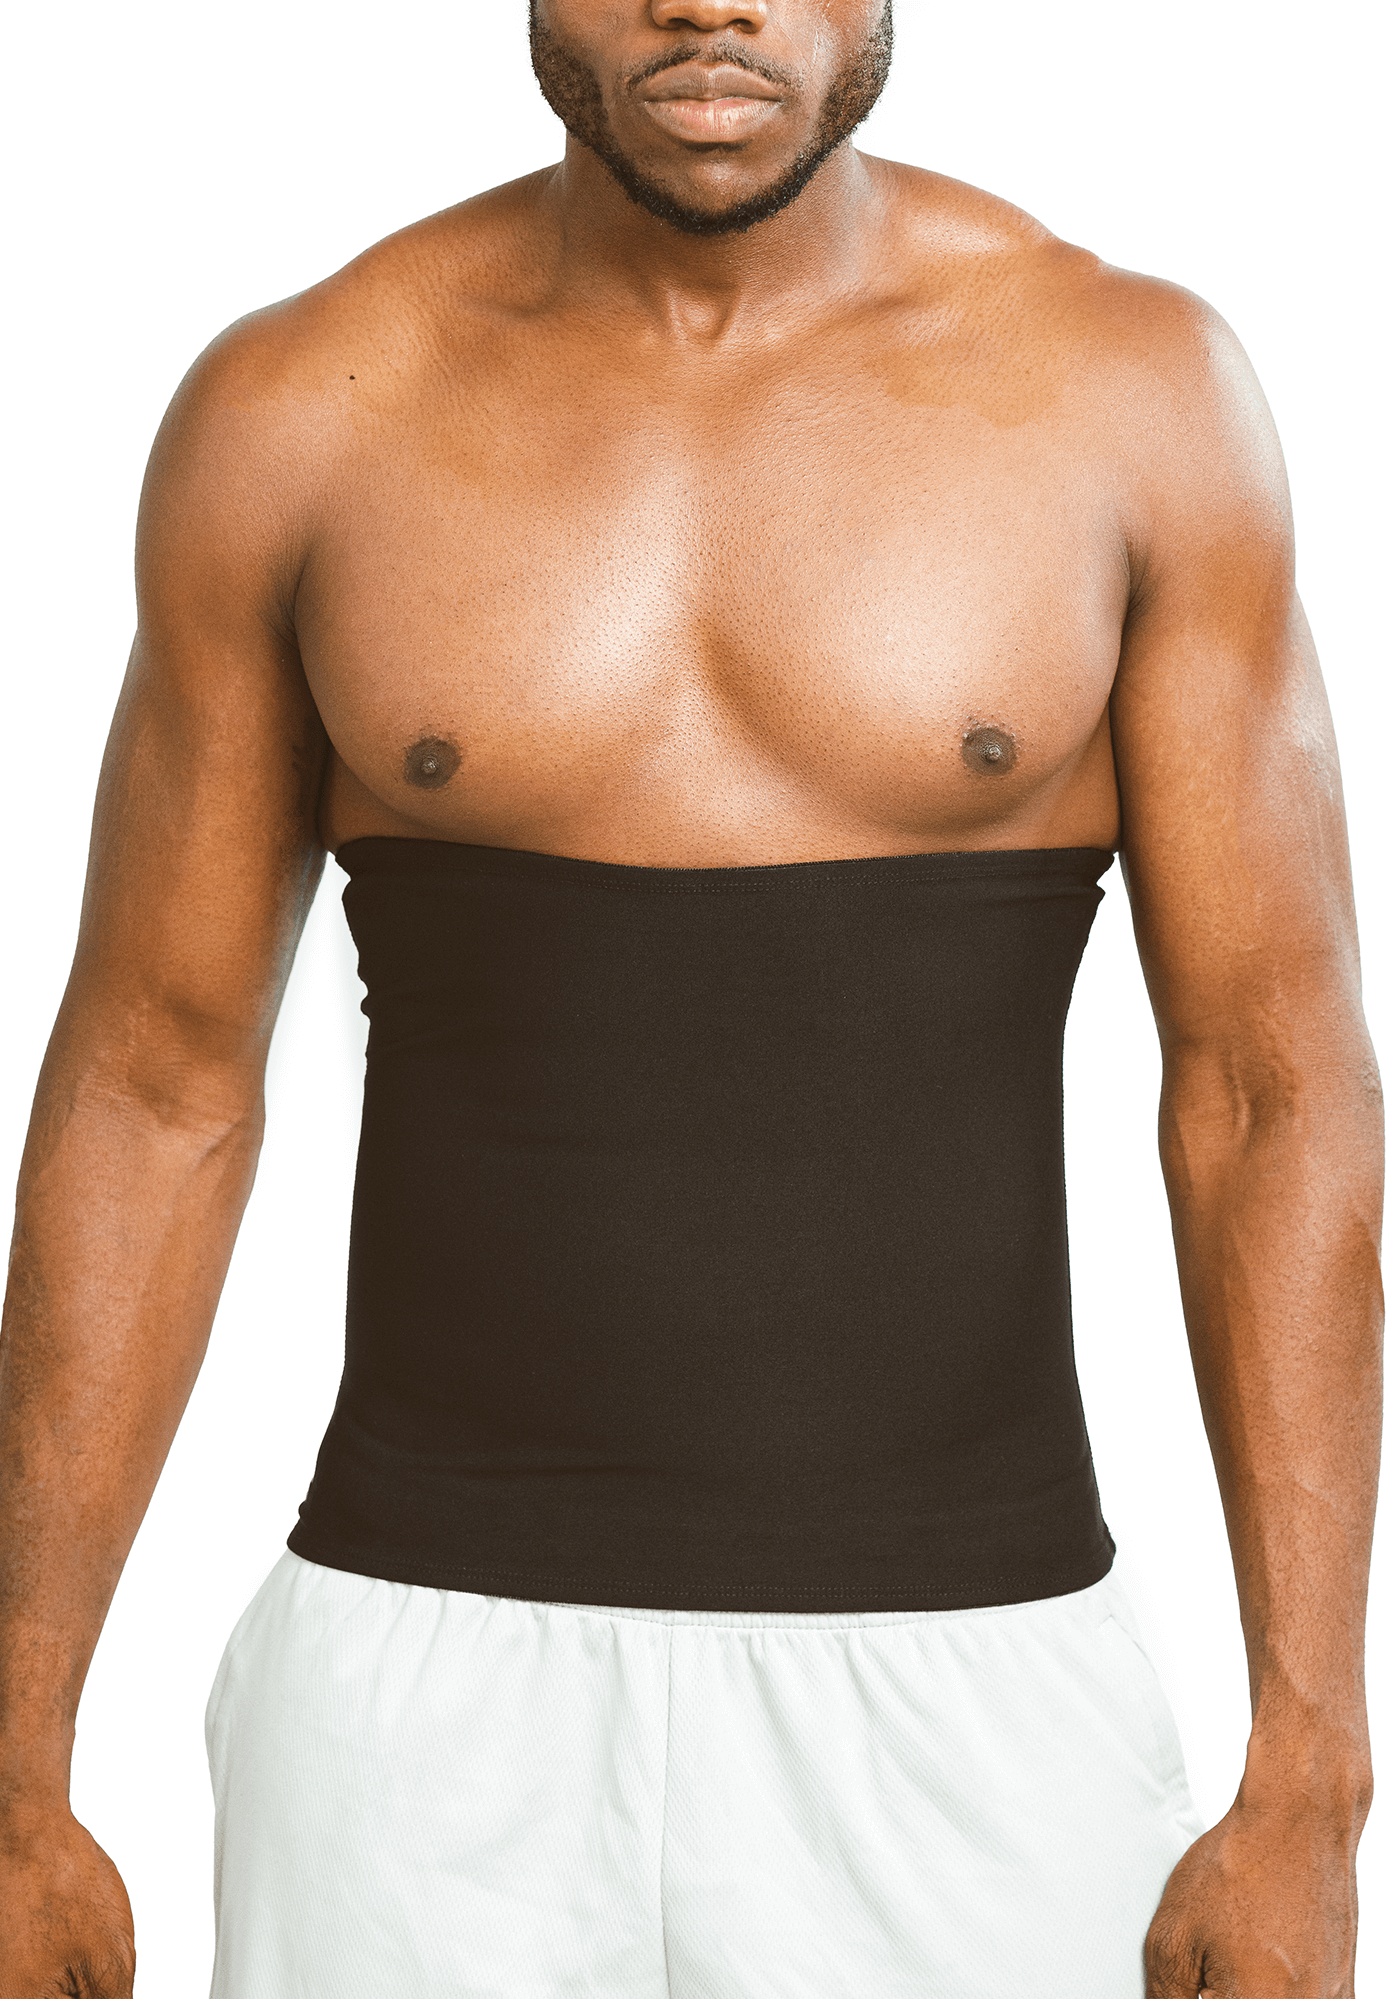 Men Waist Trainer Cincher Trimmer Sweat Belt Belly Control Slimming Body  Shaper